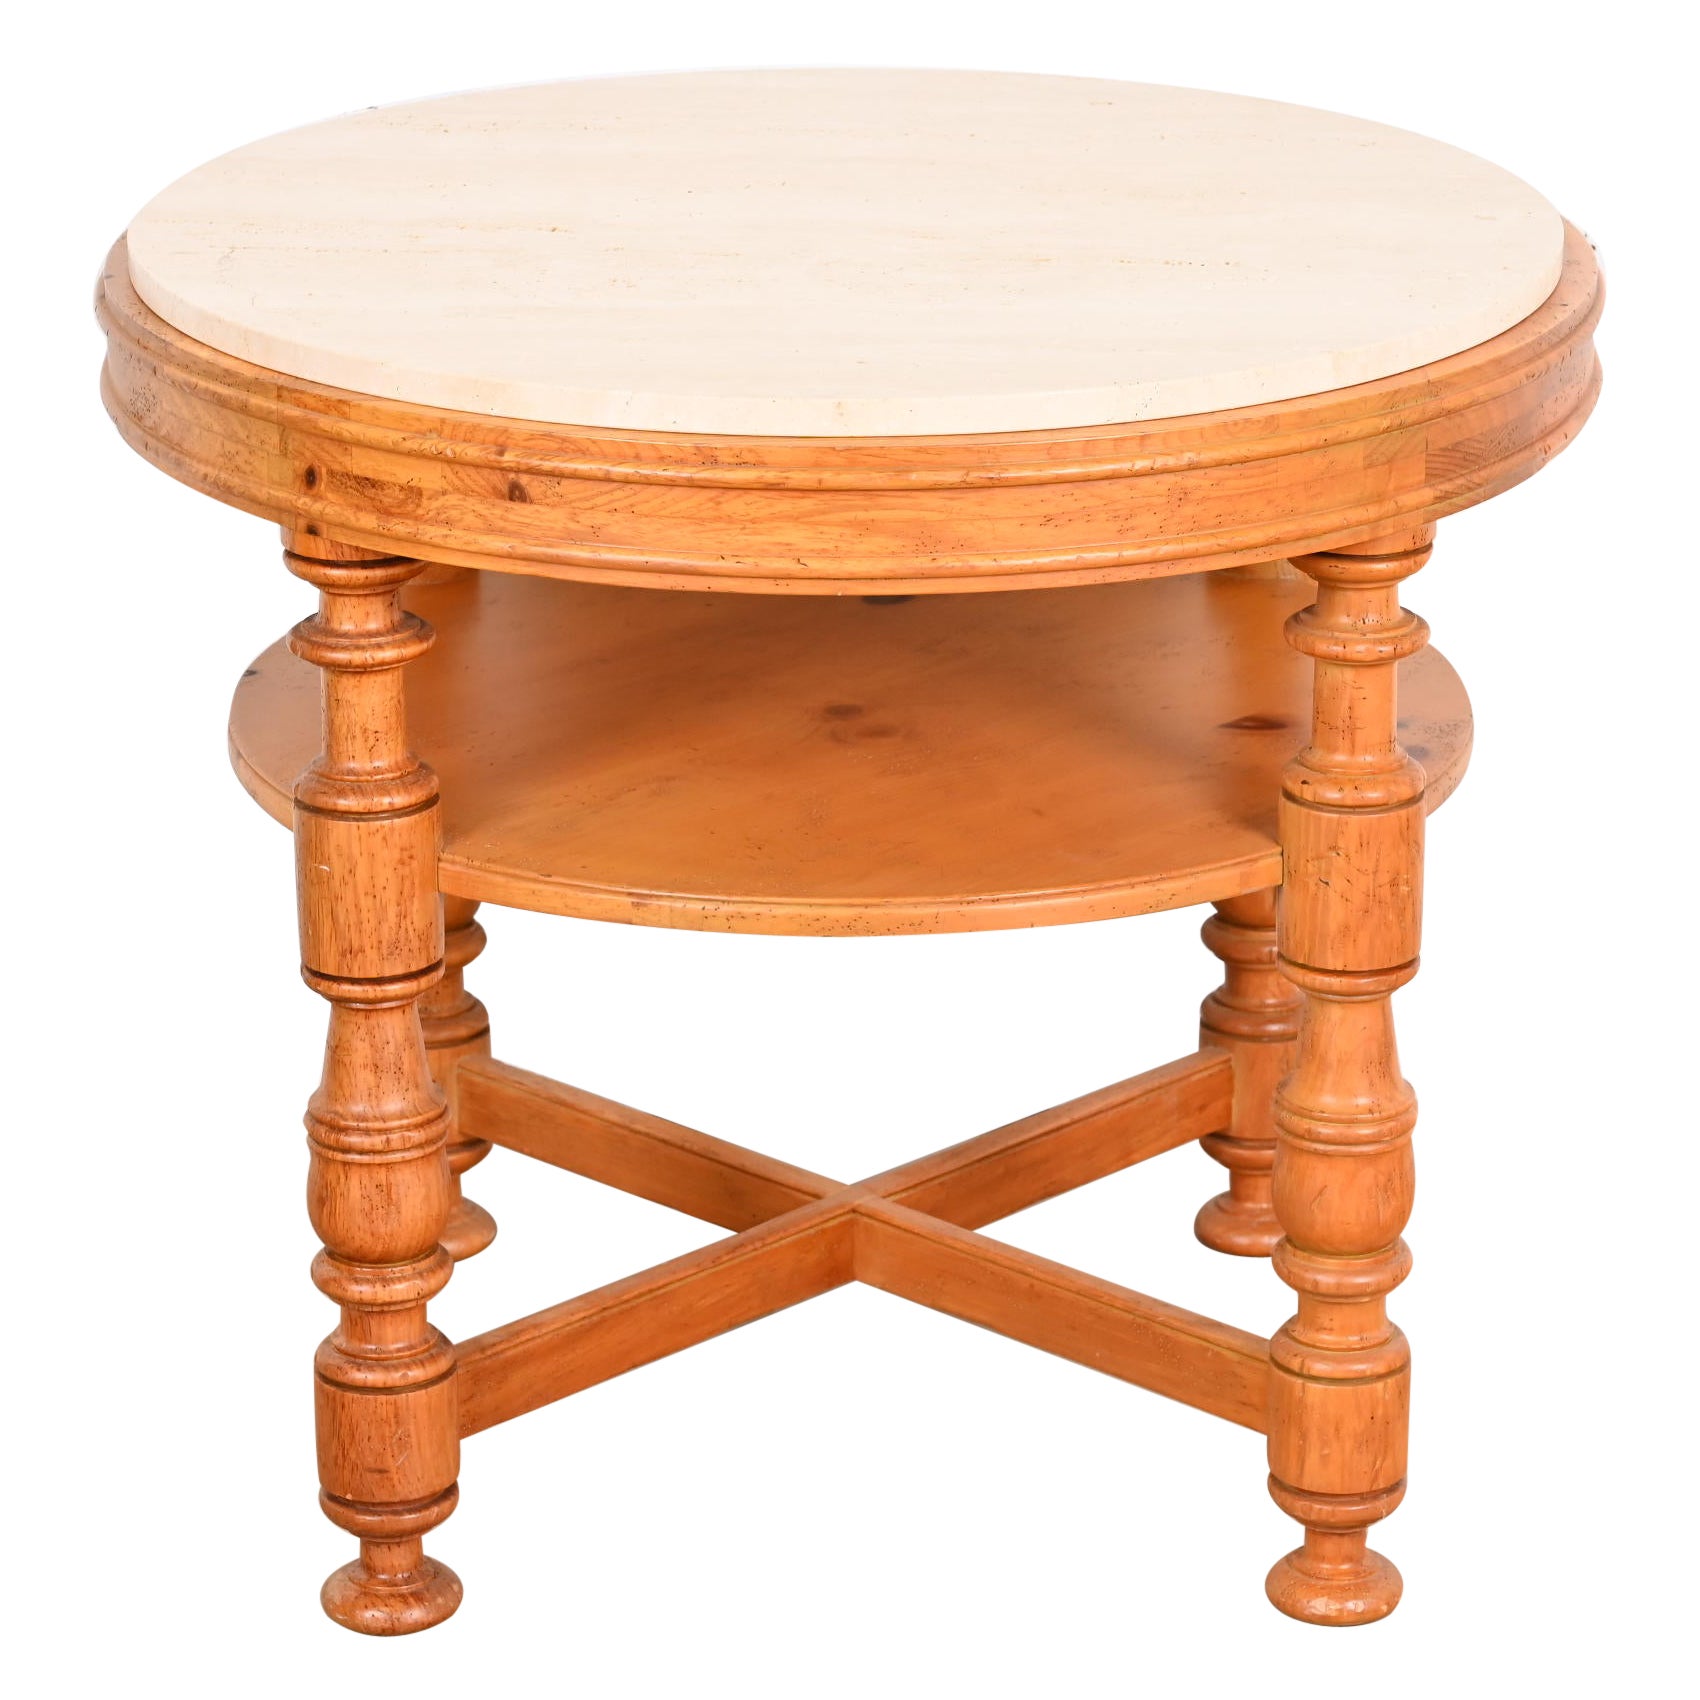 Baker Furniture Italian Provincial Pine Travertine Top Tea Table or Center Table